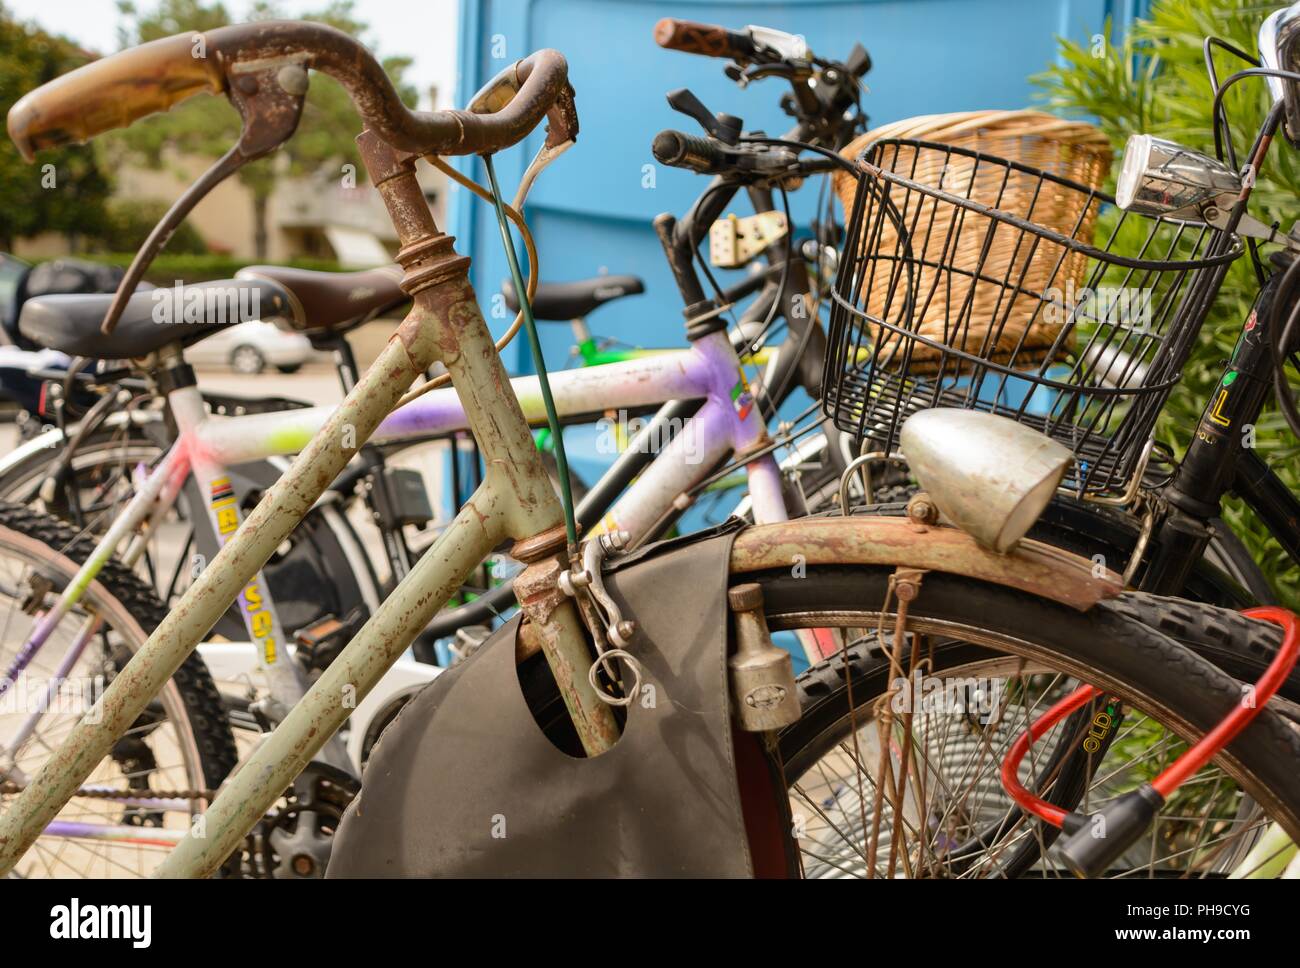 Nostalgic rusty bicycle locked for safety - close-up Stock Photo